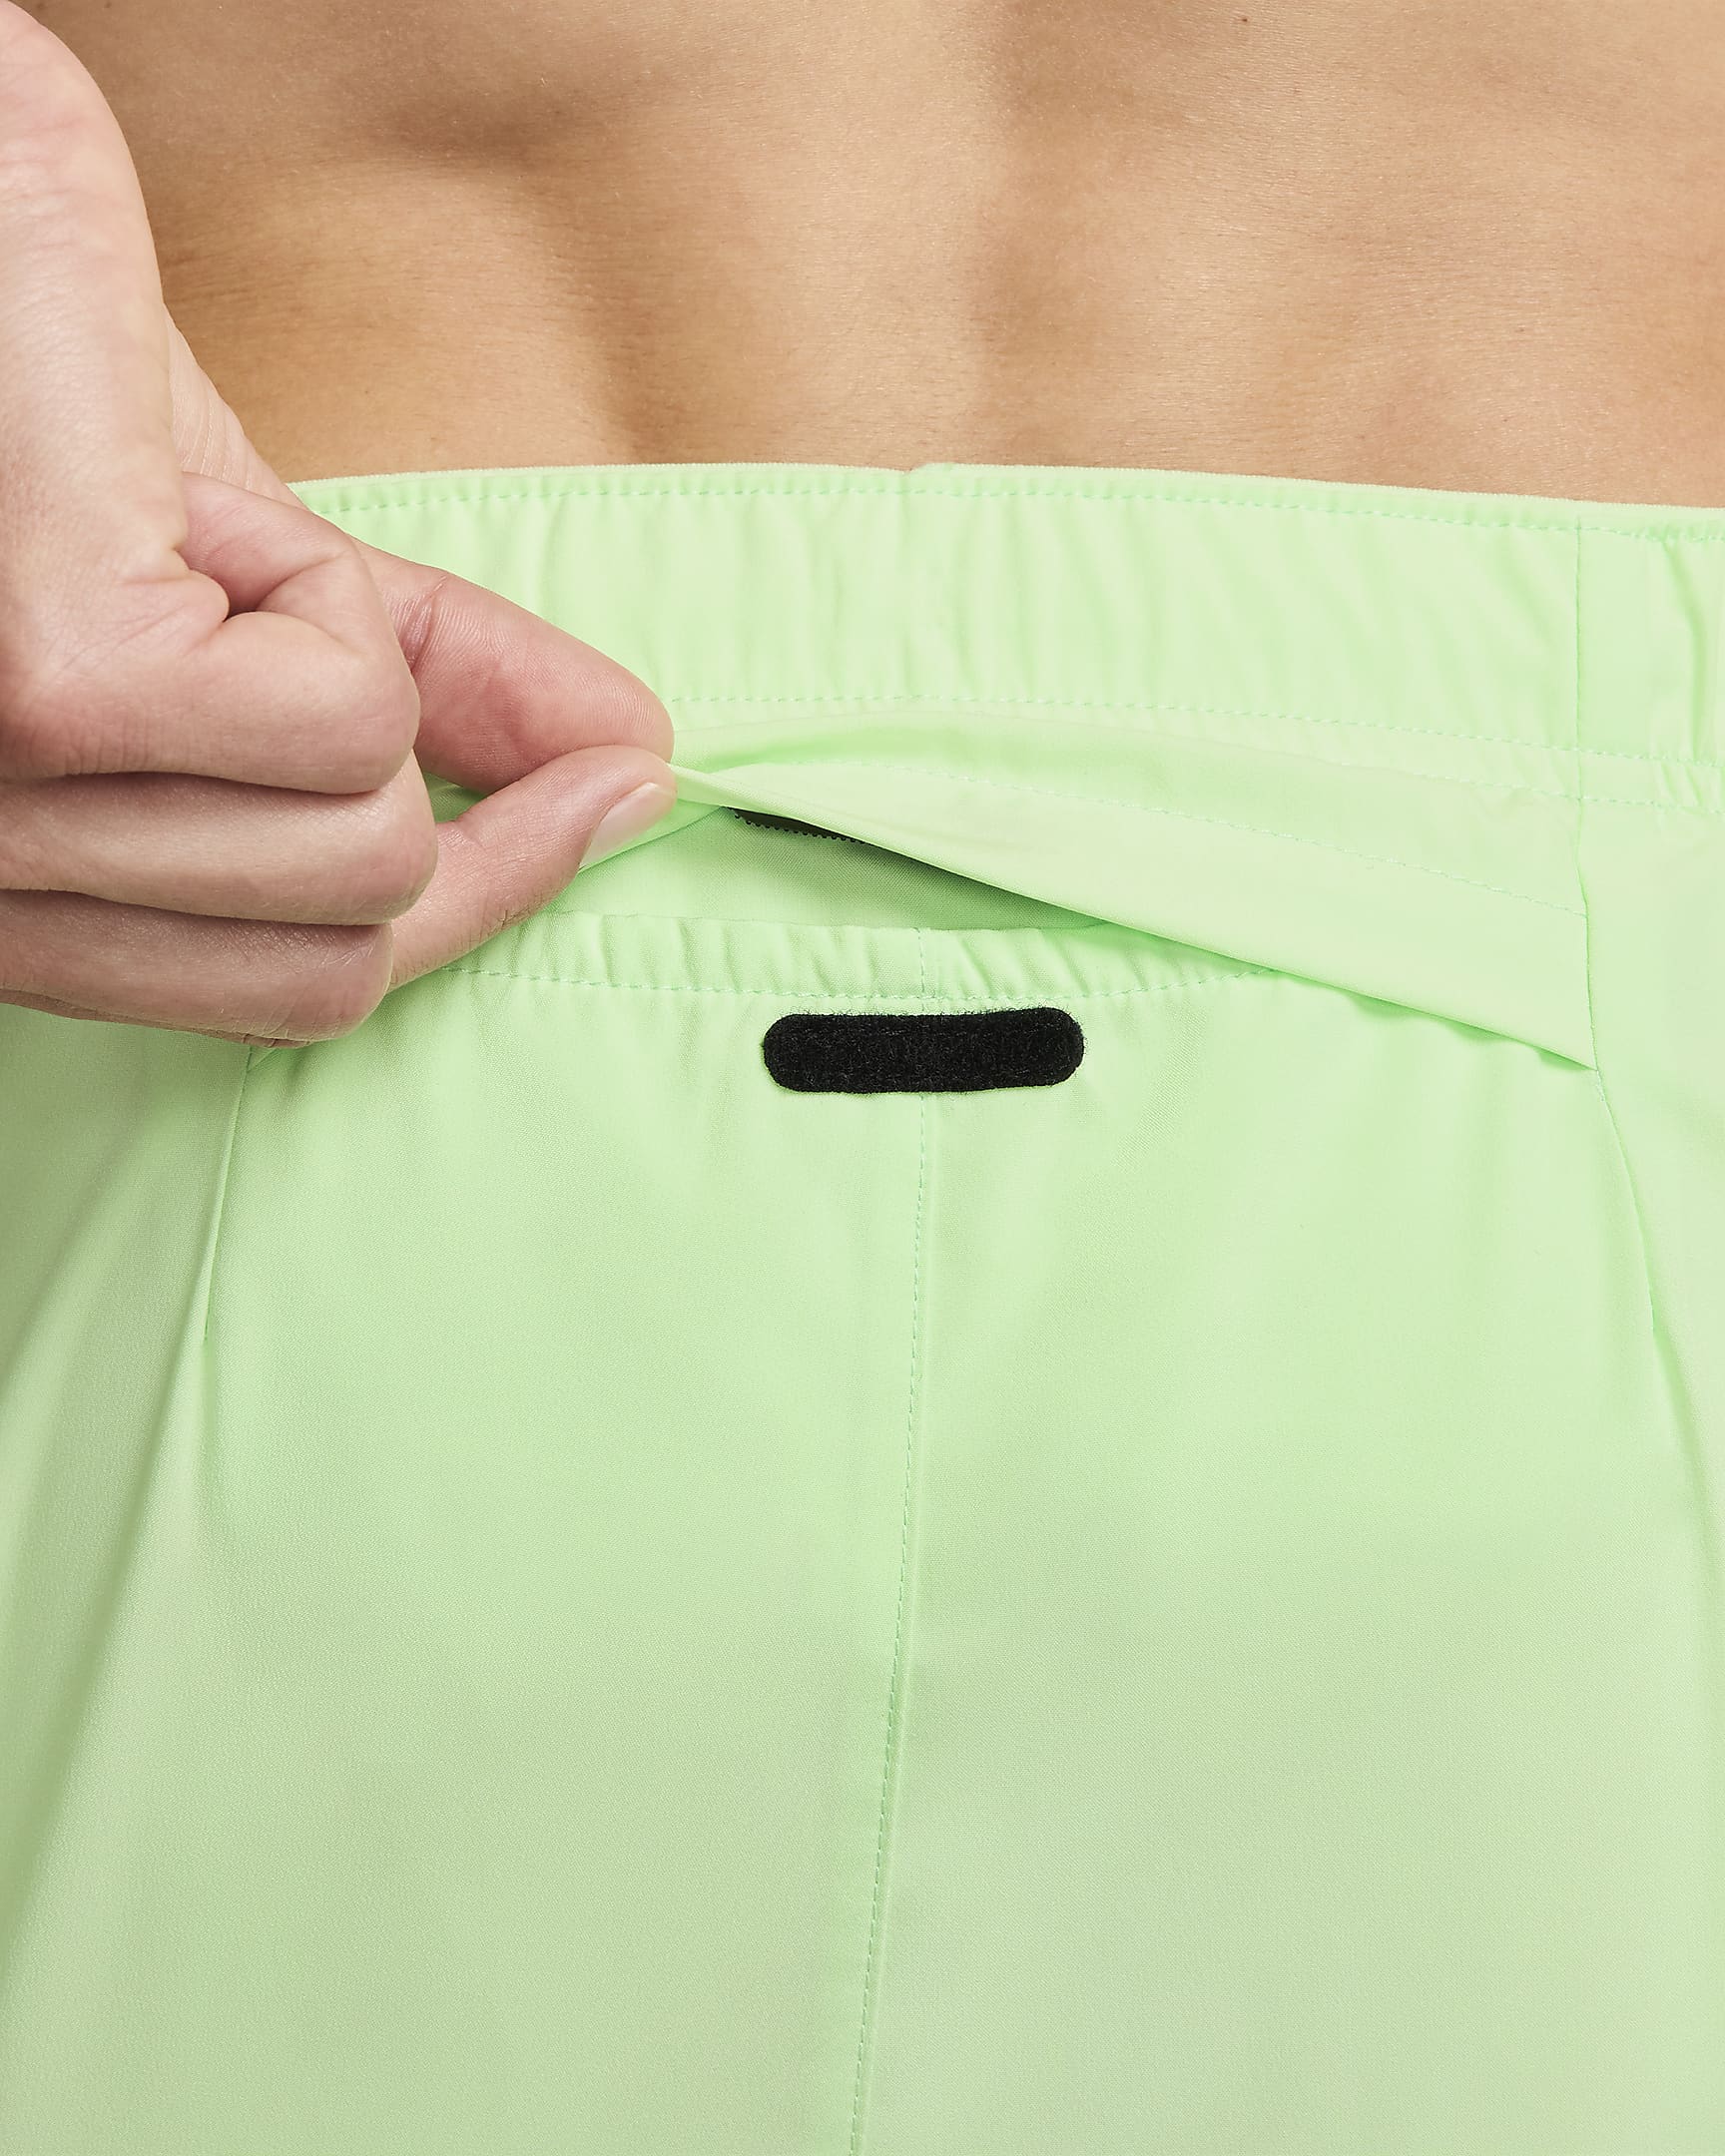 Shorts de running con forro de ropa interior Dri-FIT de 13 cm para ...